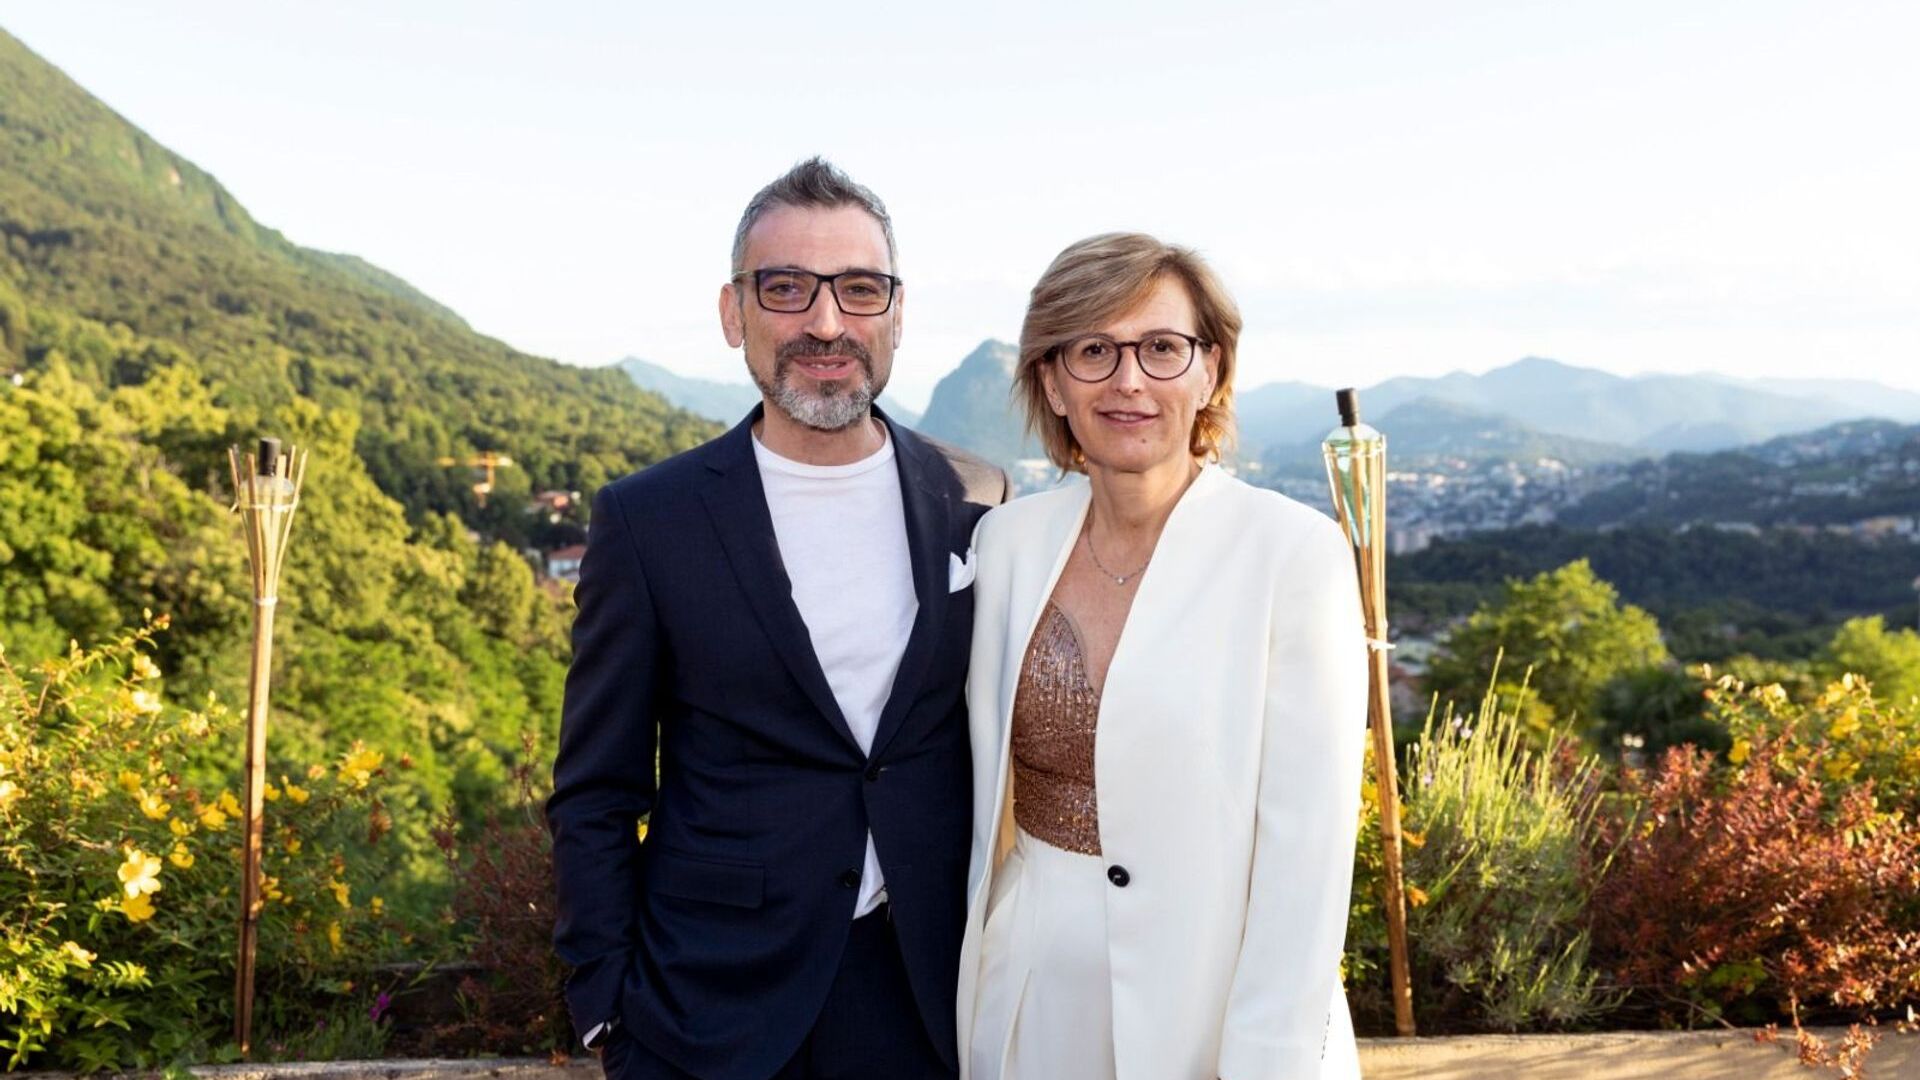 Kristīna Džoto (Cristina Giotto), prezidente un Luka Mauriello (Luca Mauriello), viceprezidents, iemieso jauno ated-ICT Ticino augstāko vadību.